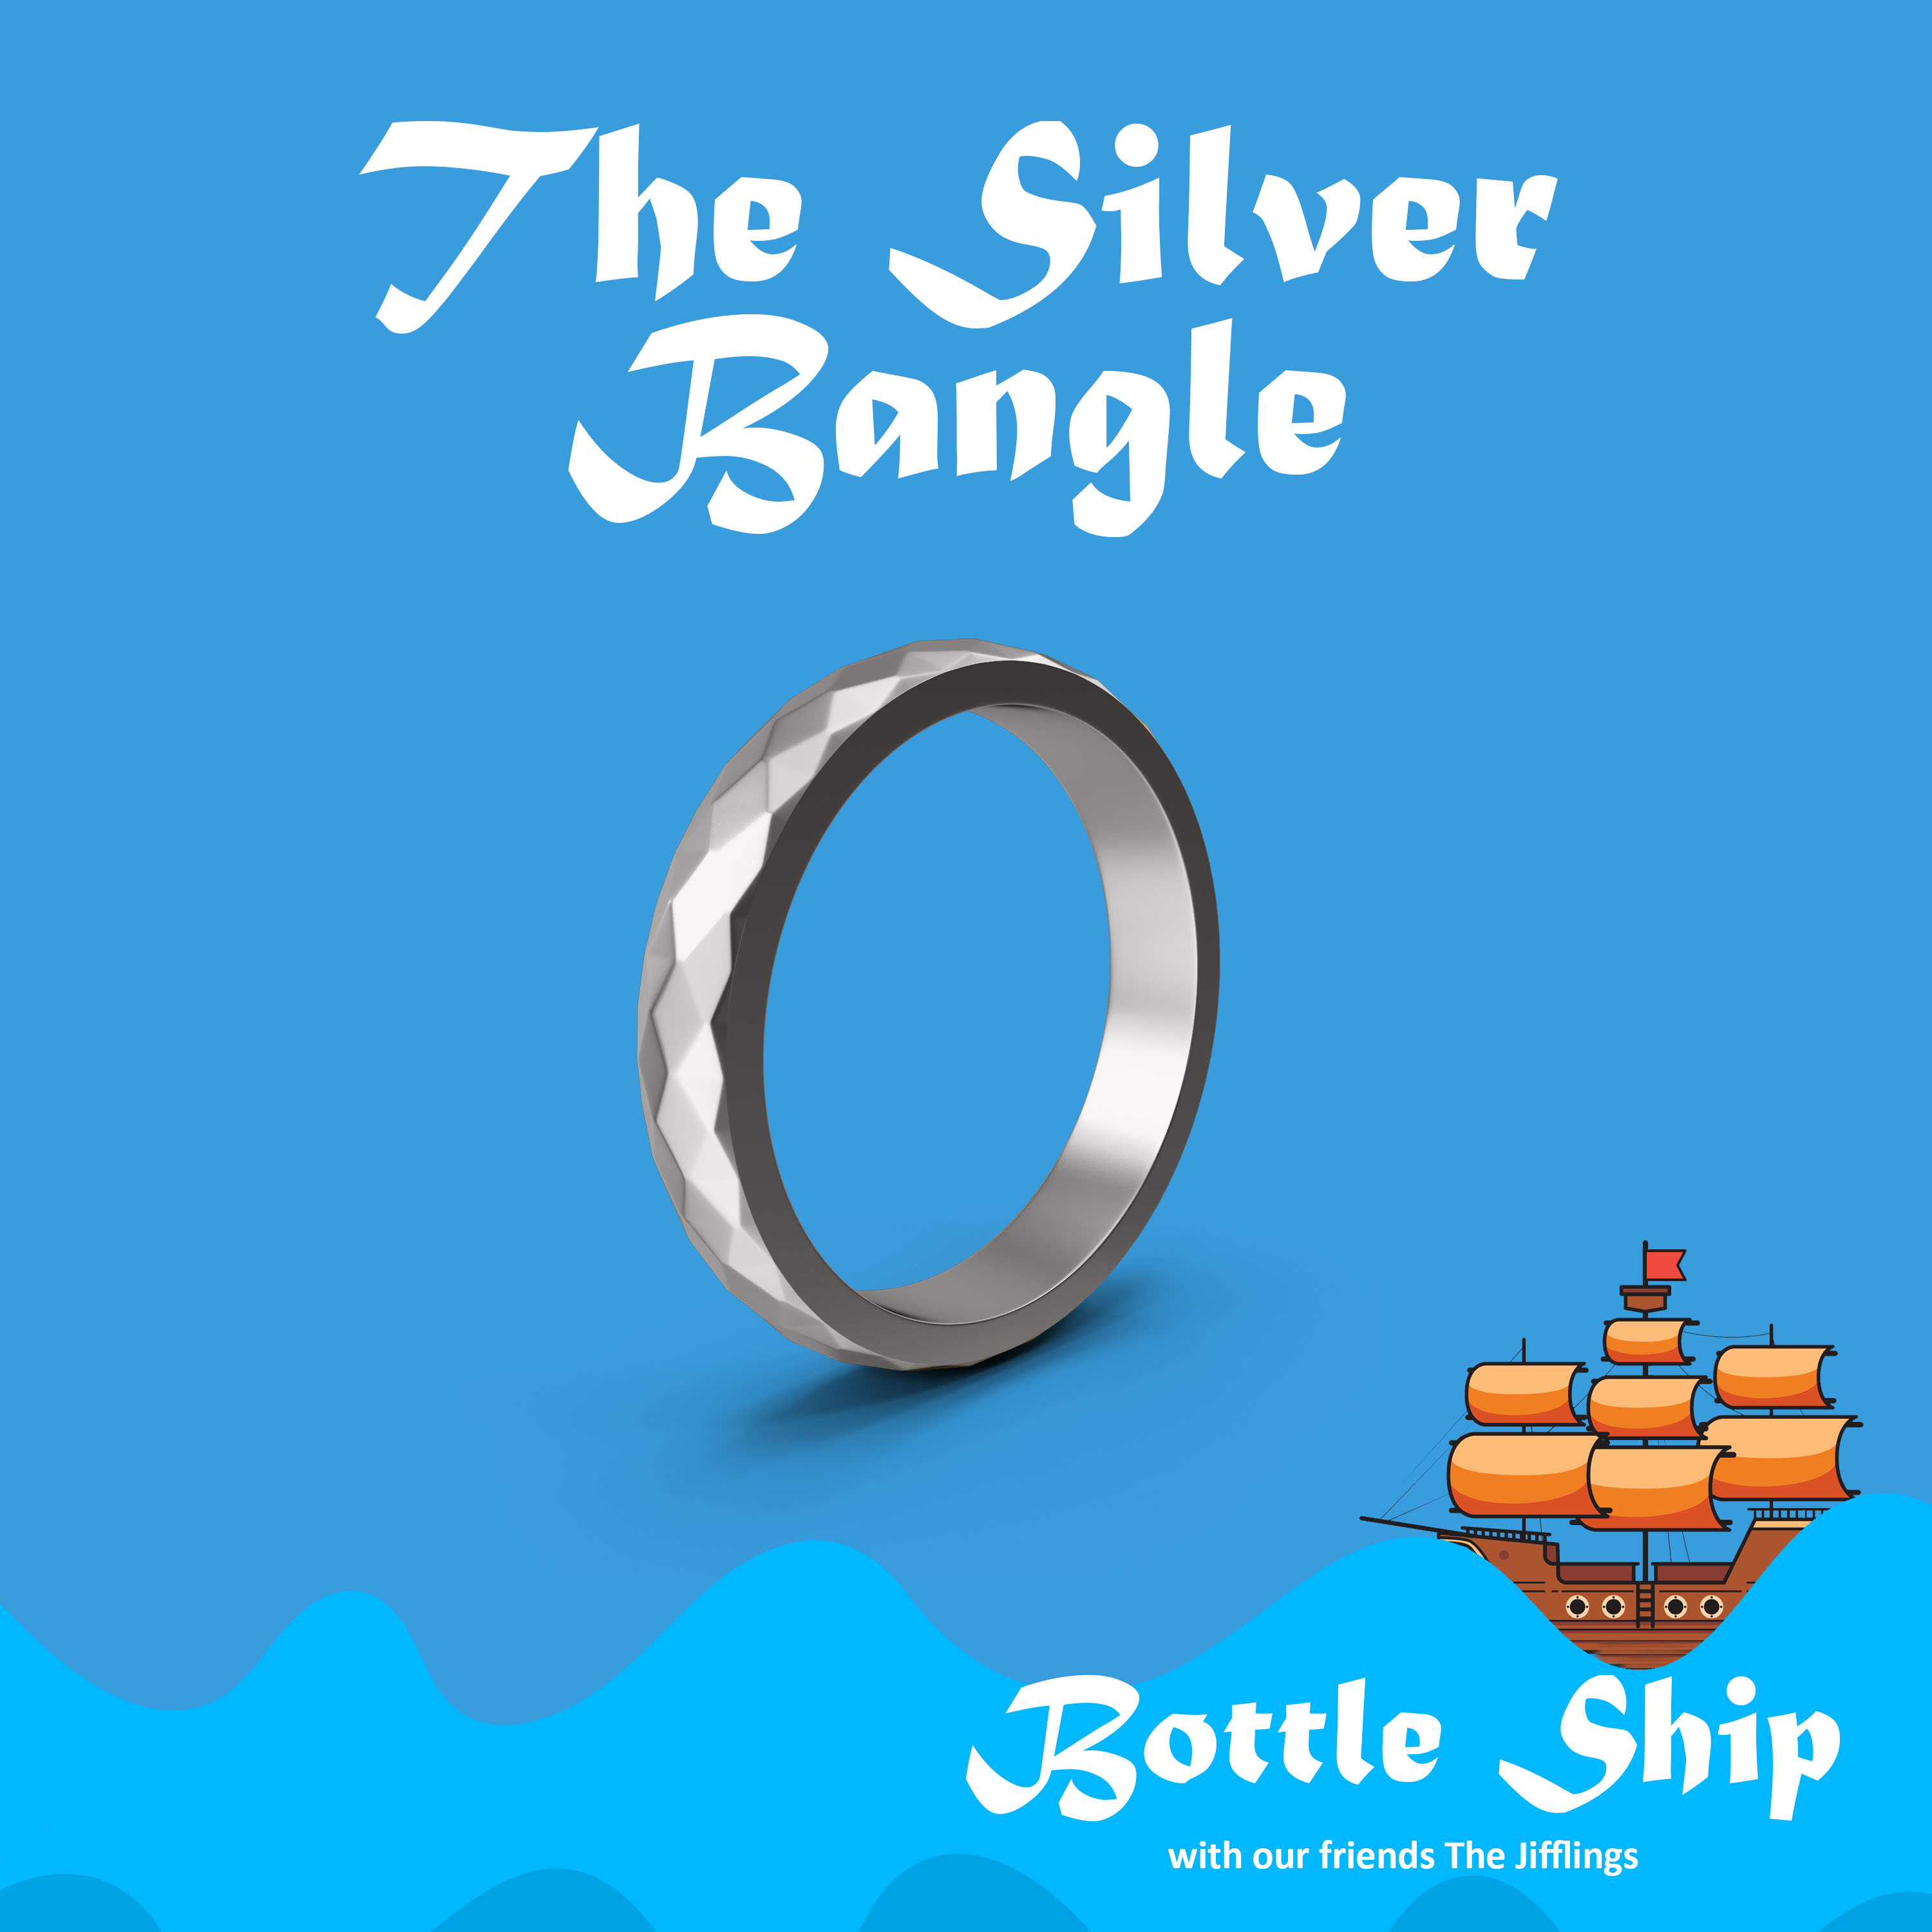 The Silver Bangle